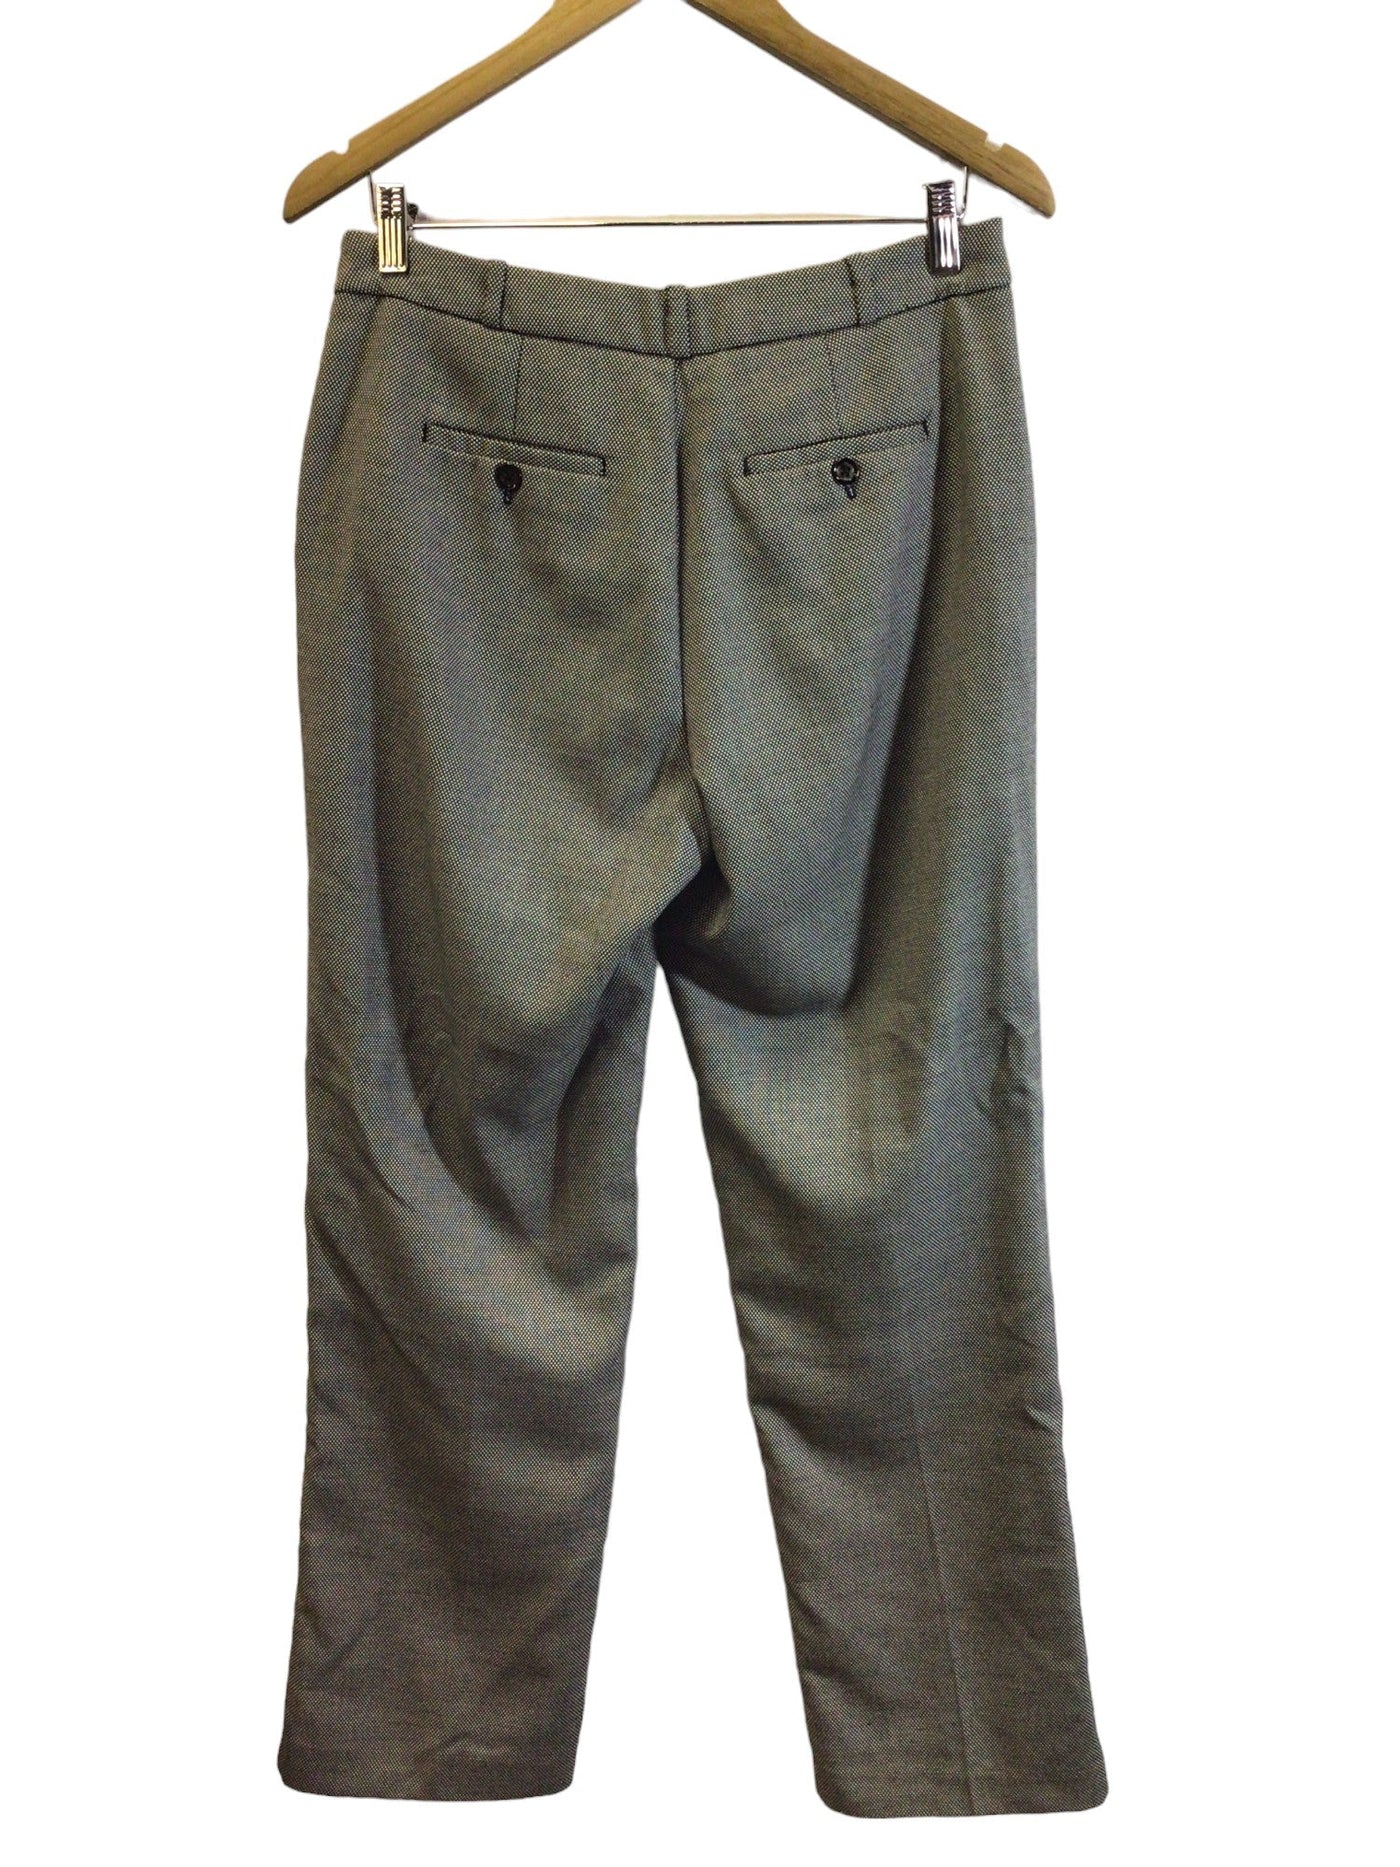 TRADITION Women Work Pants Regular fit in Black - Size 6 | 15 $ KOOP